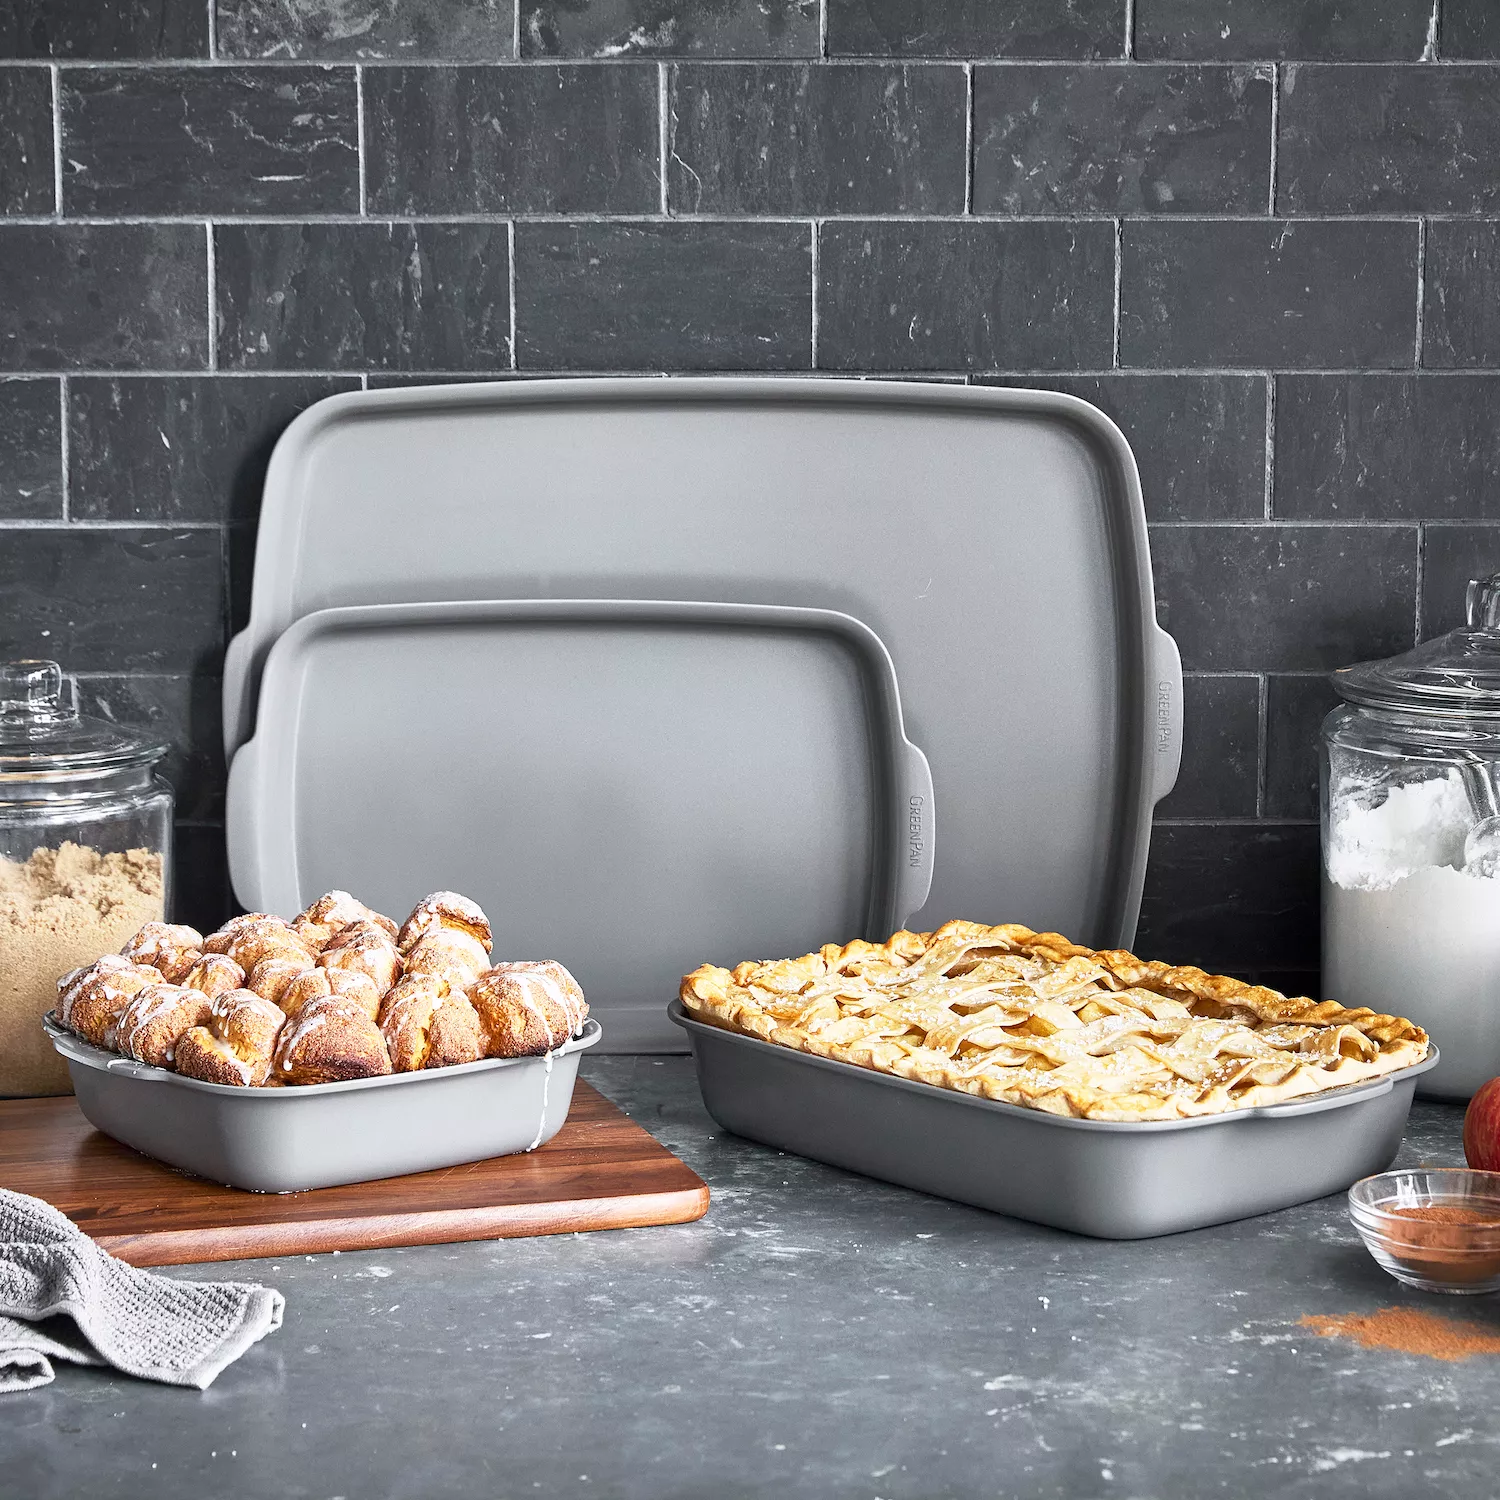 Premiere Ovenware Ceramic Nonstick 1 lb. Loaf Pan